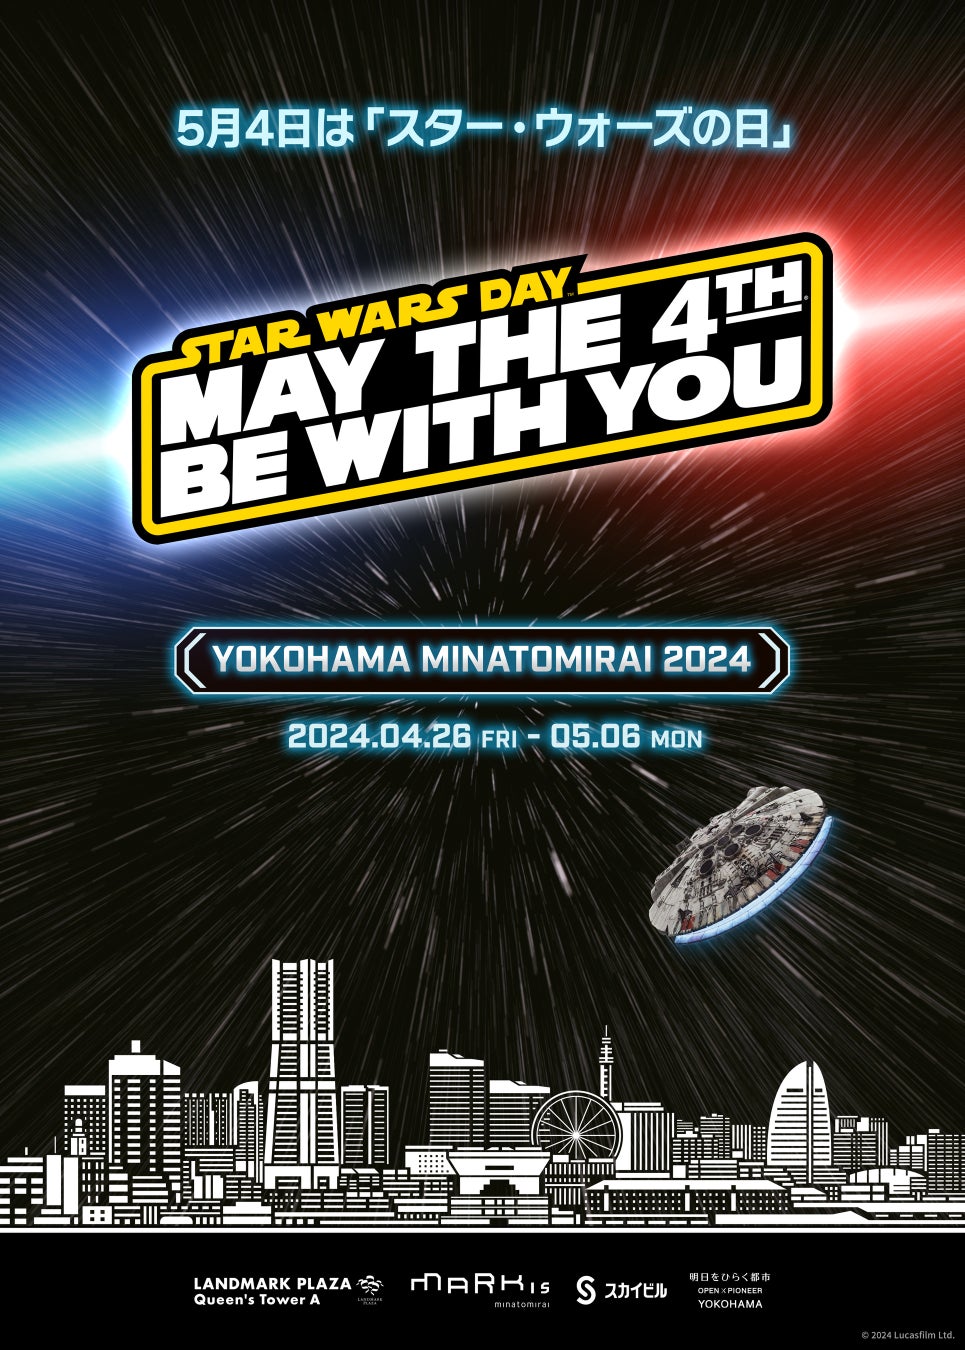 「STAR WARS DAY YOKOHAMA MINATOMIRAI 2024」 トラベルスポット